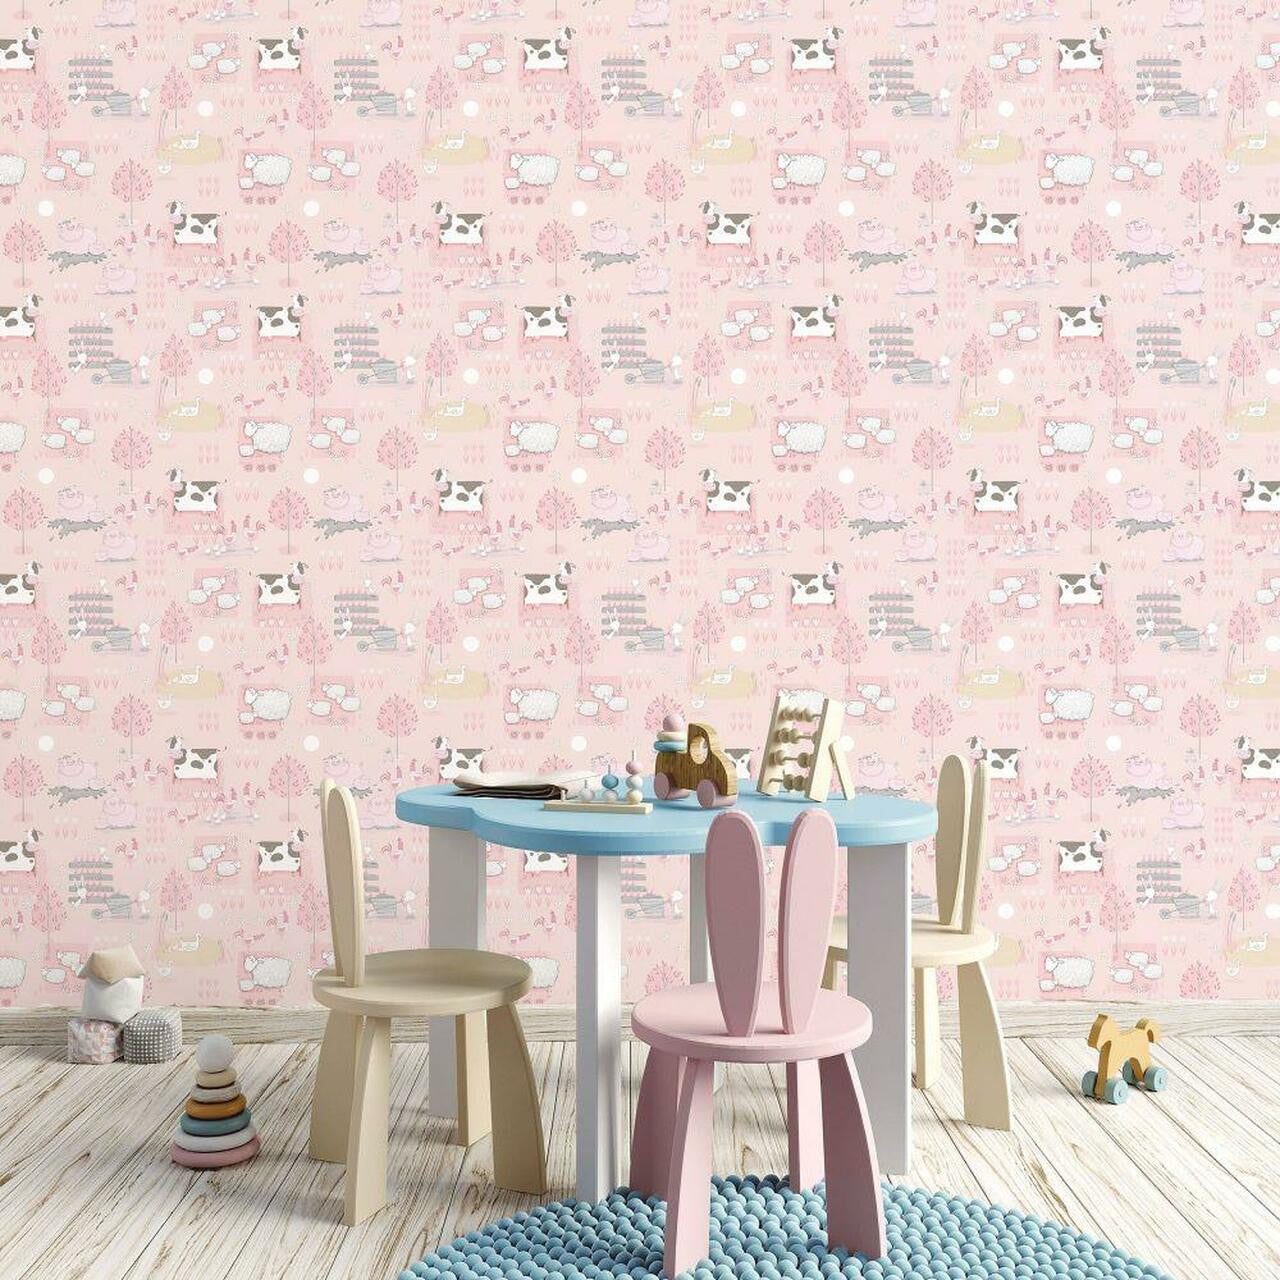 Farmland Tiny Tots 2 Nursery Room Wallpaper - Pink